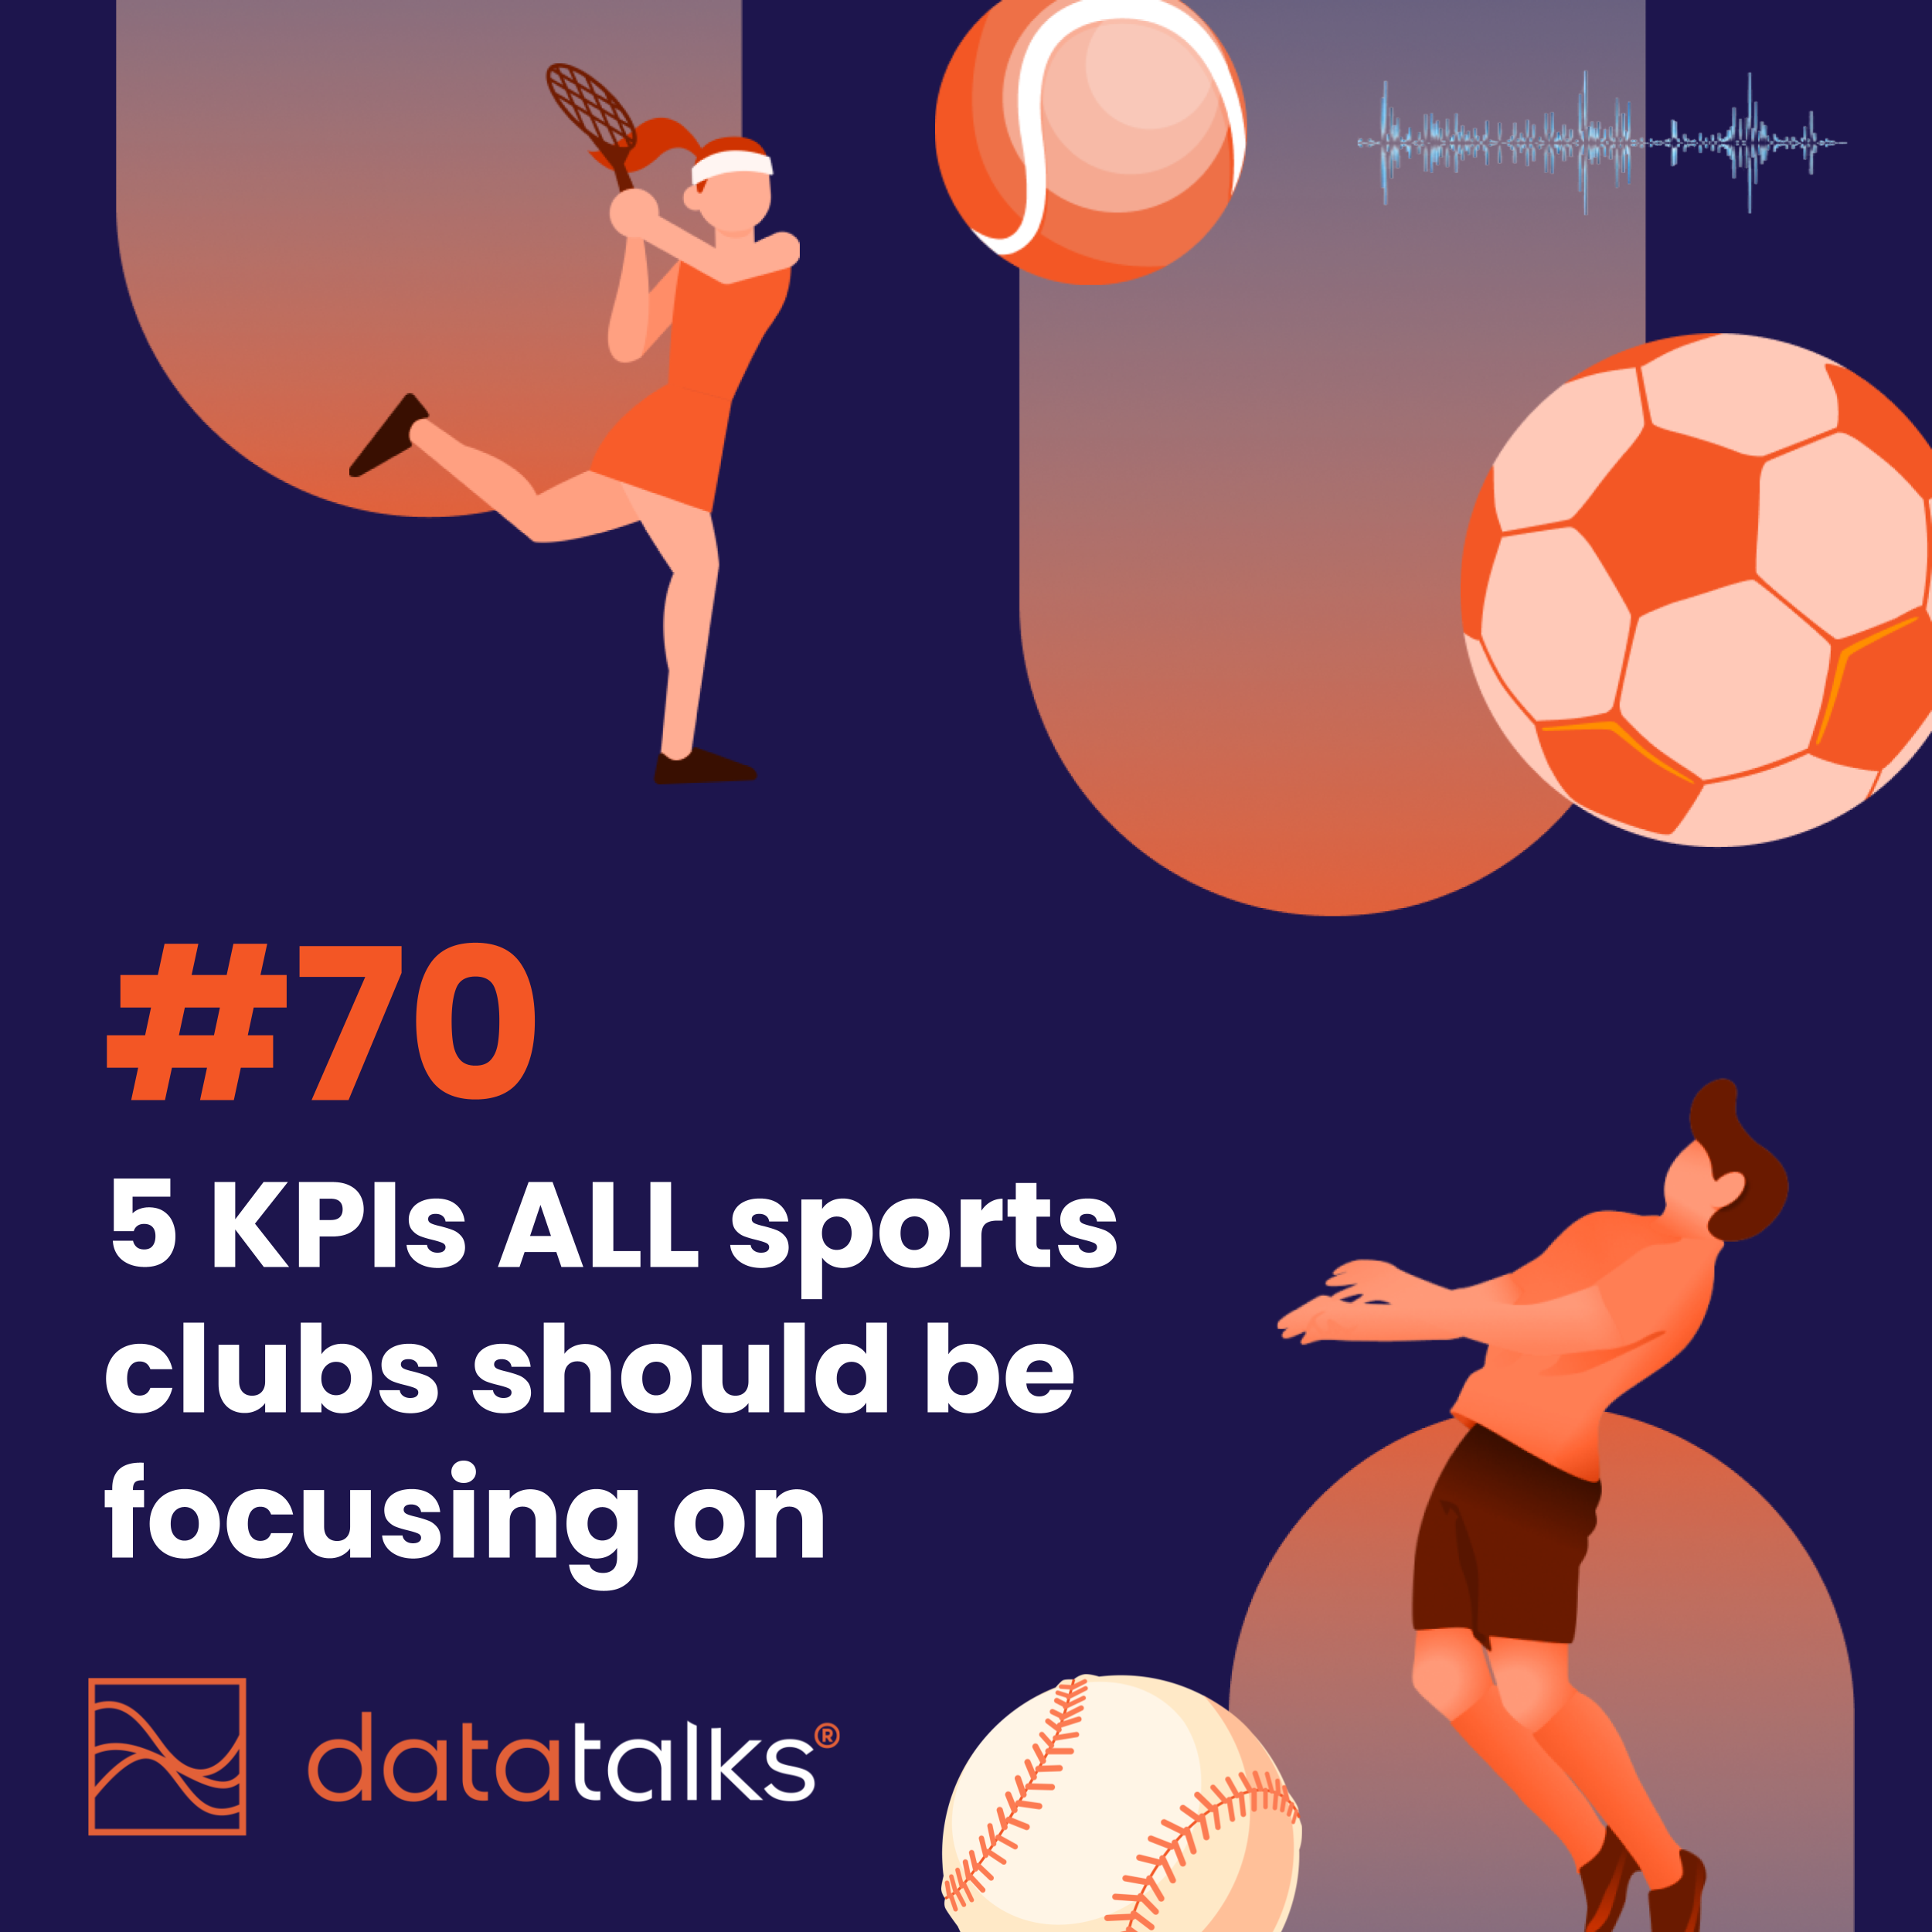 Artwork for podcast Sports CDP Crash Course - Data Talks